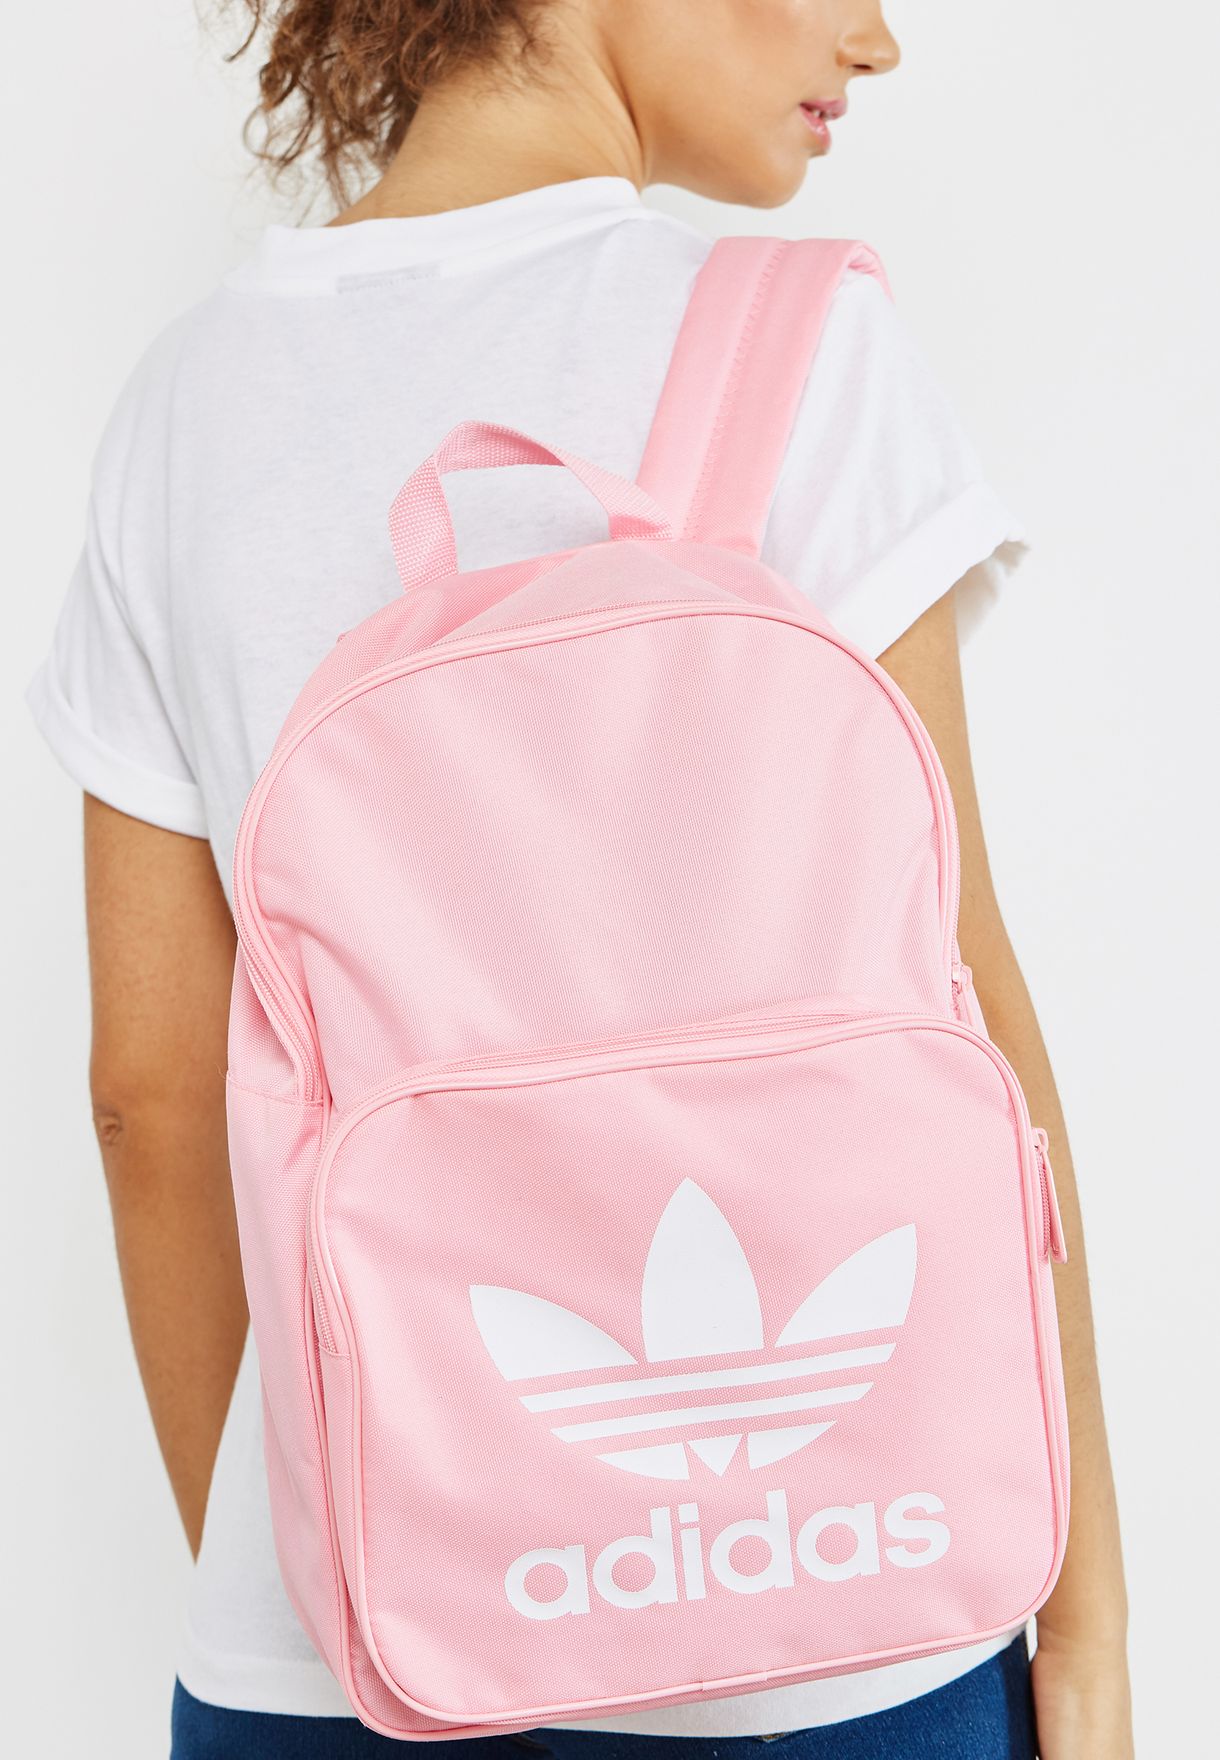 adidas trefoil backpack pink